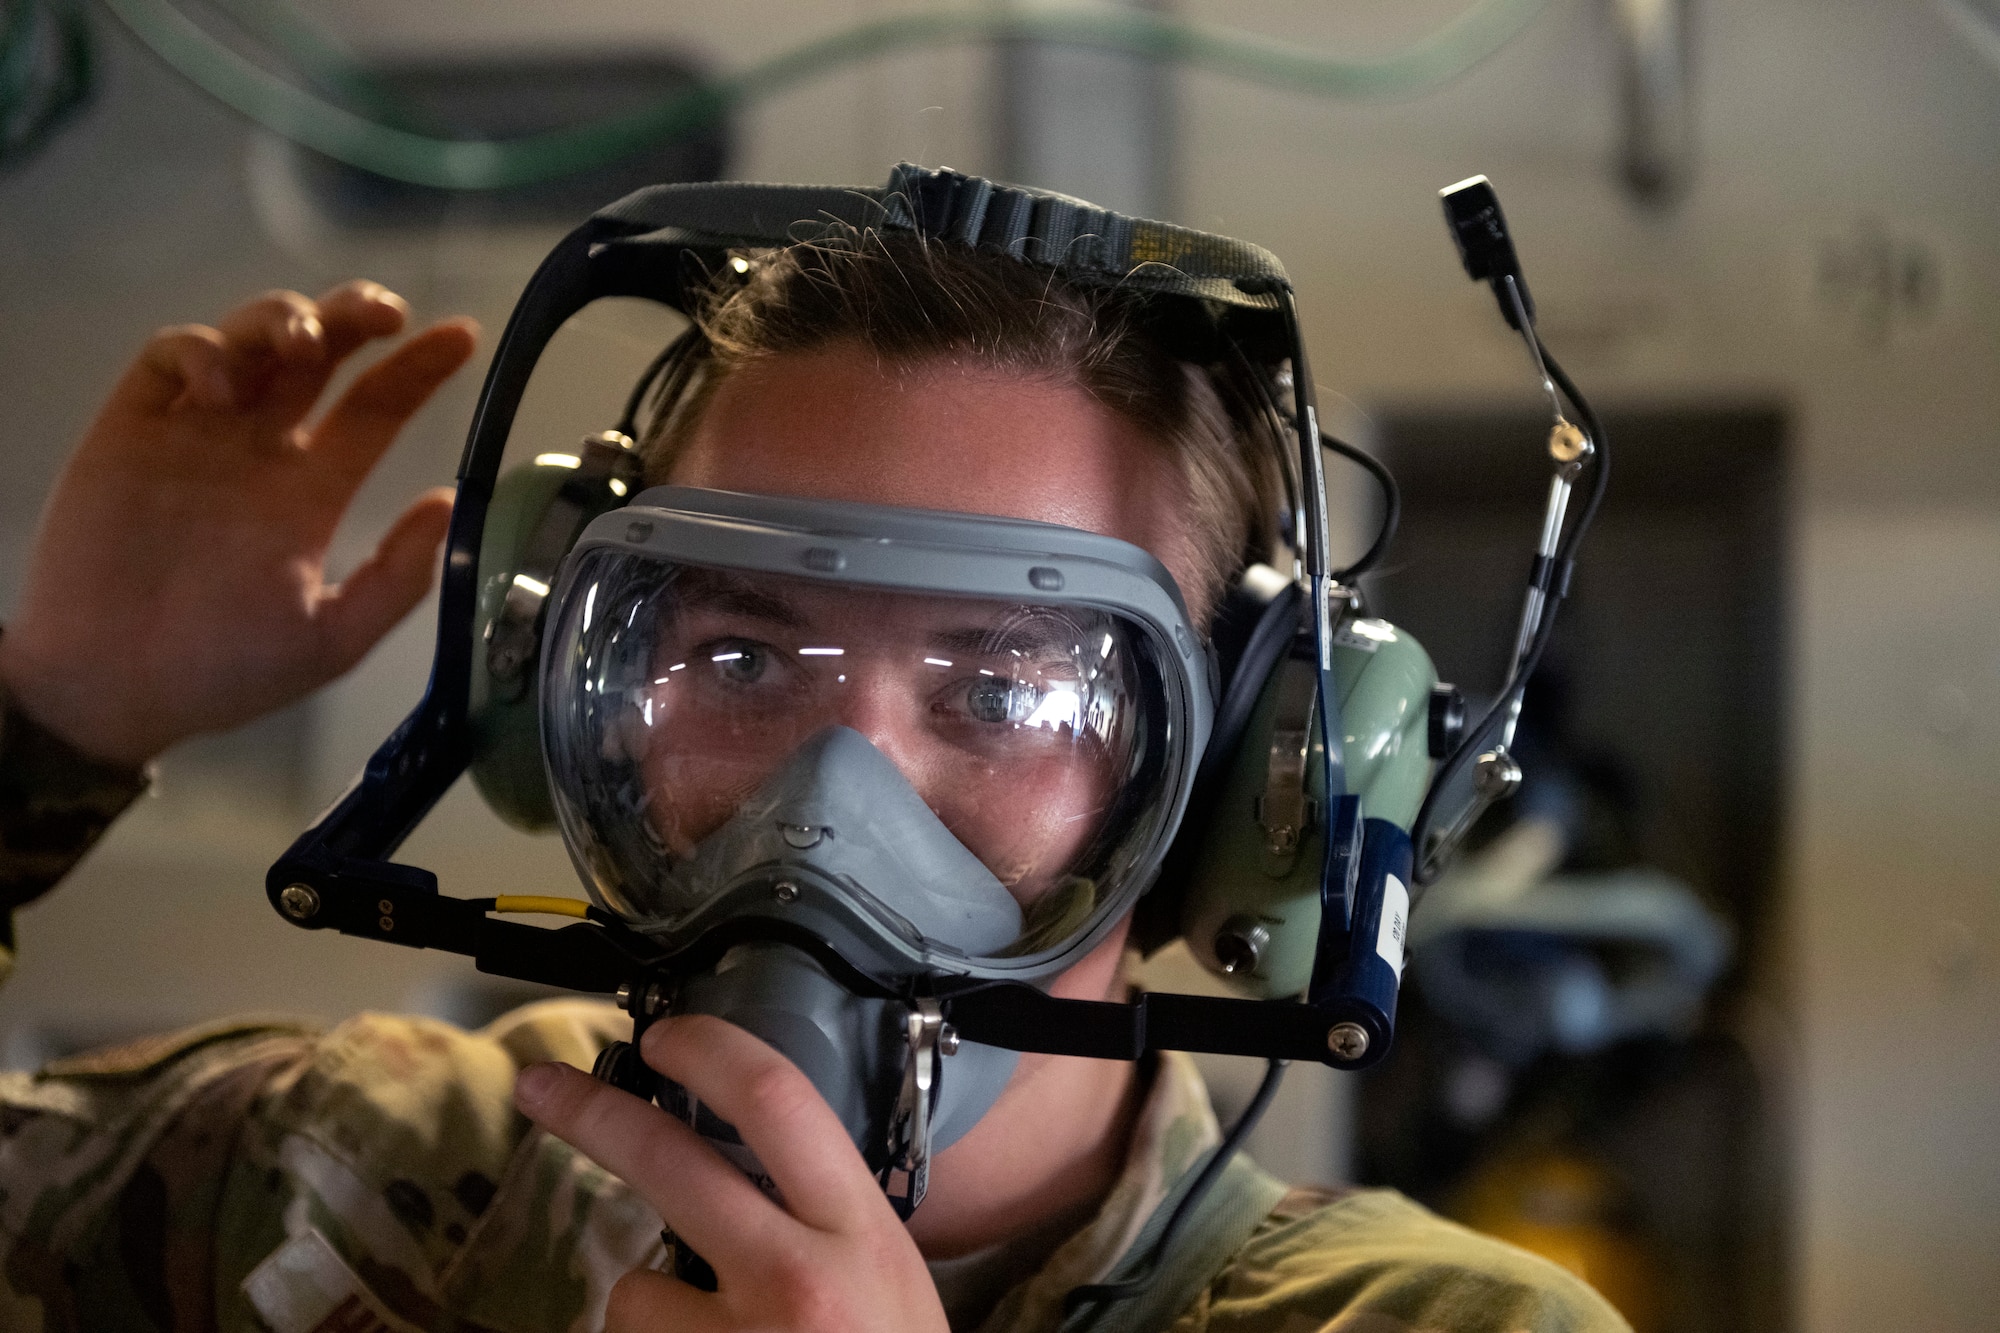 Photos of AES airman training.